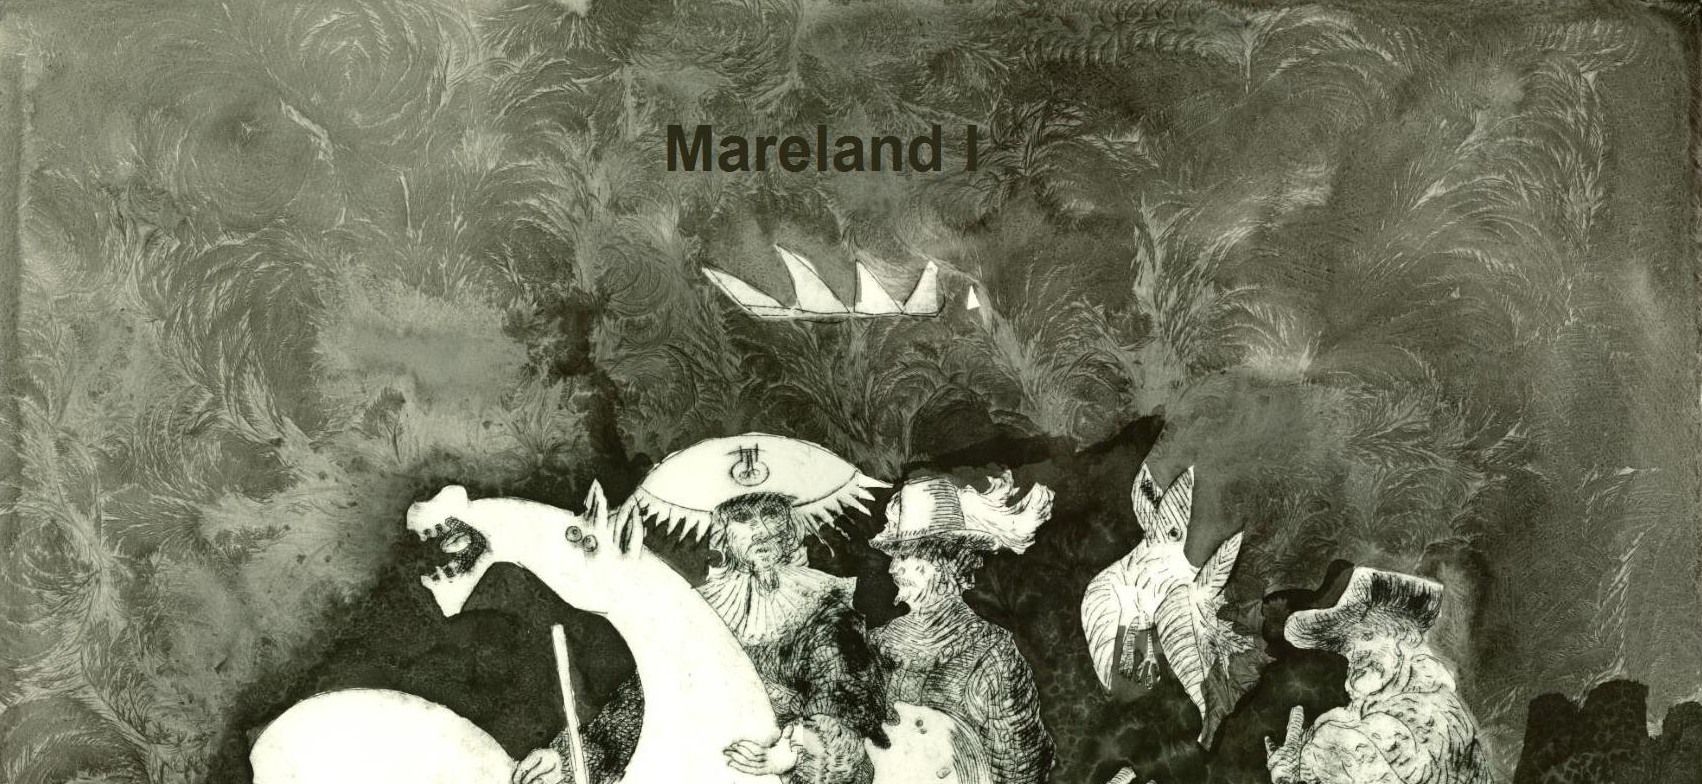 Mareland I